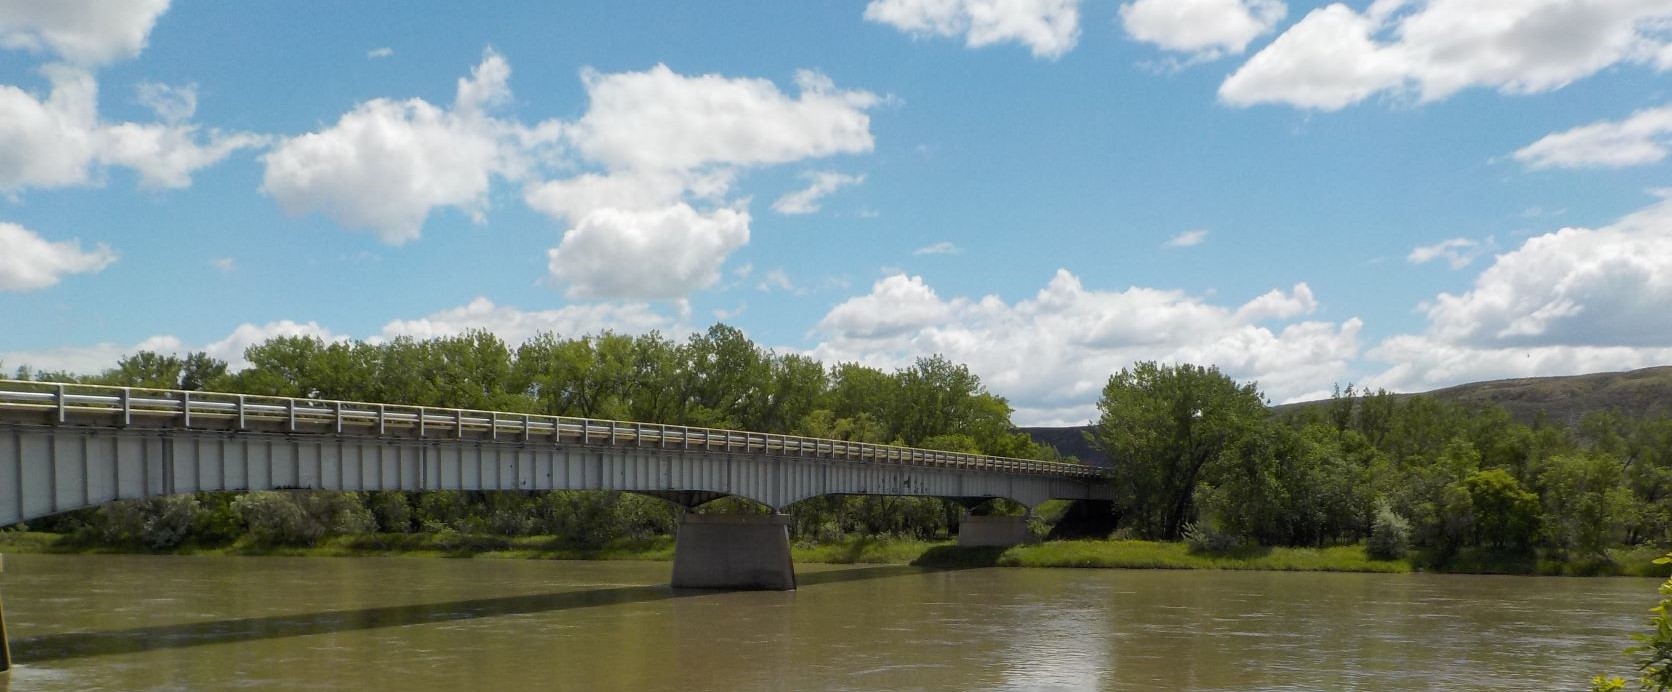 Fort Benton Bridge